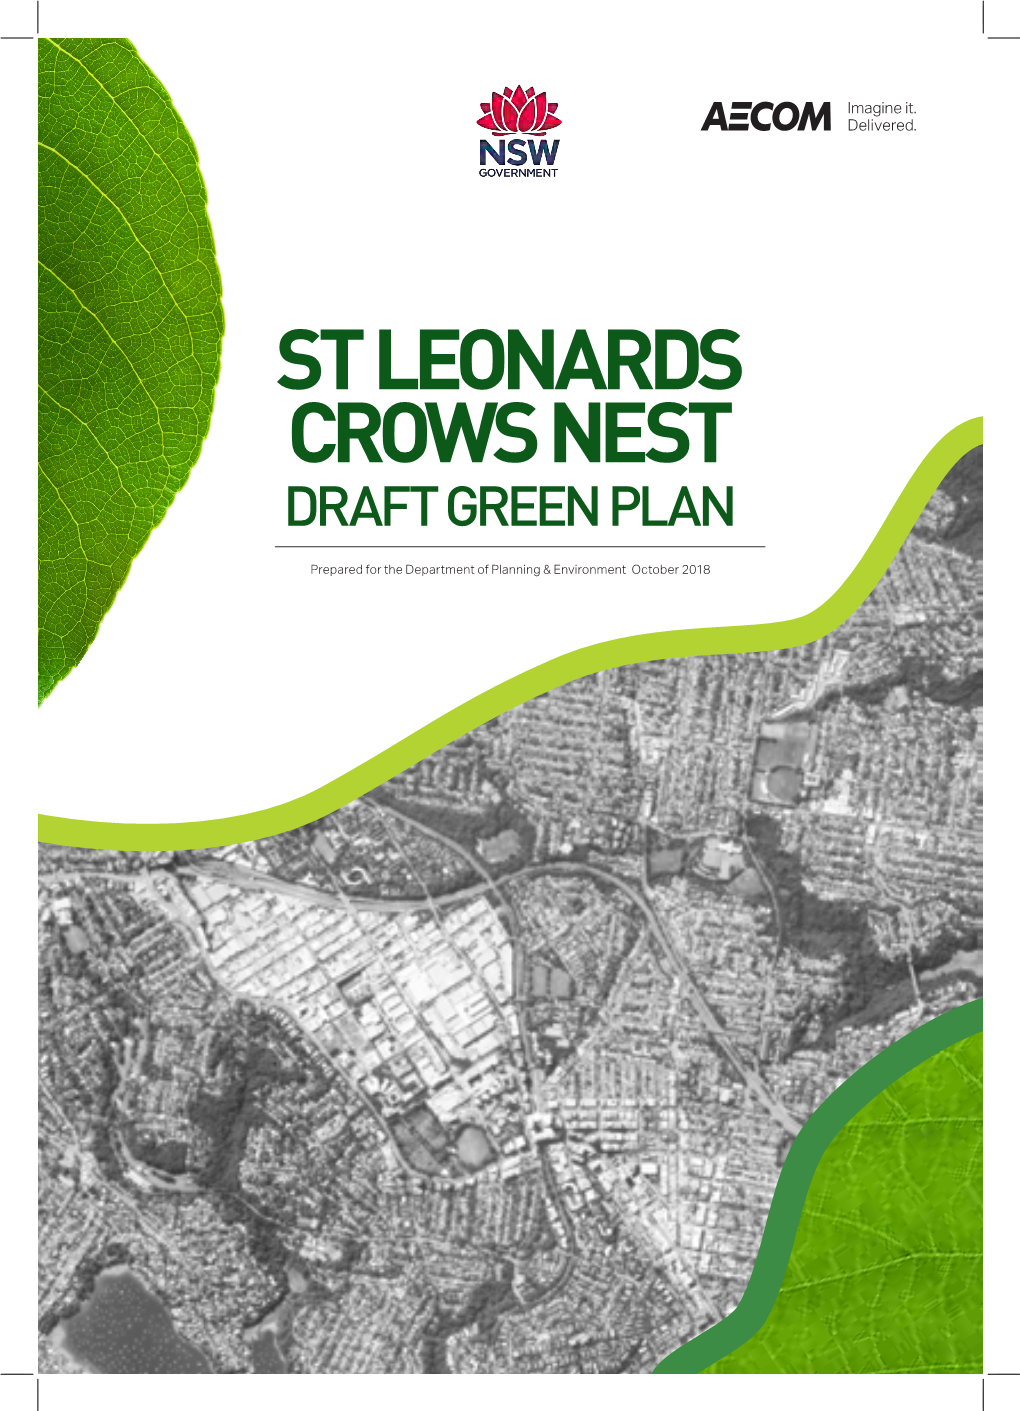 St Leonards Crows Nest Draft Green Plan